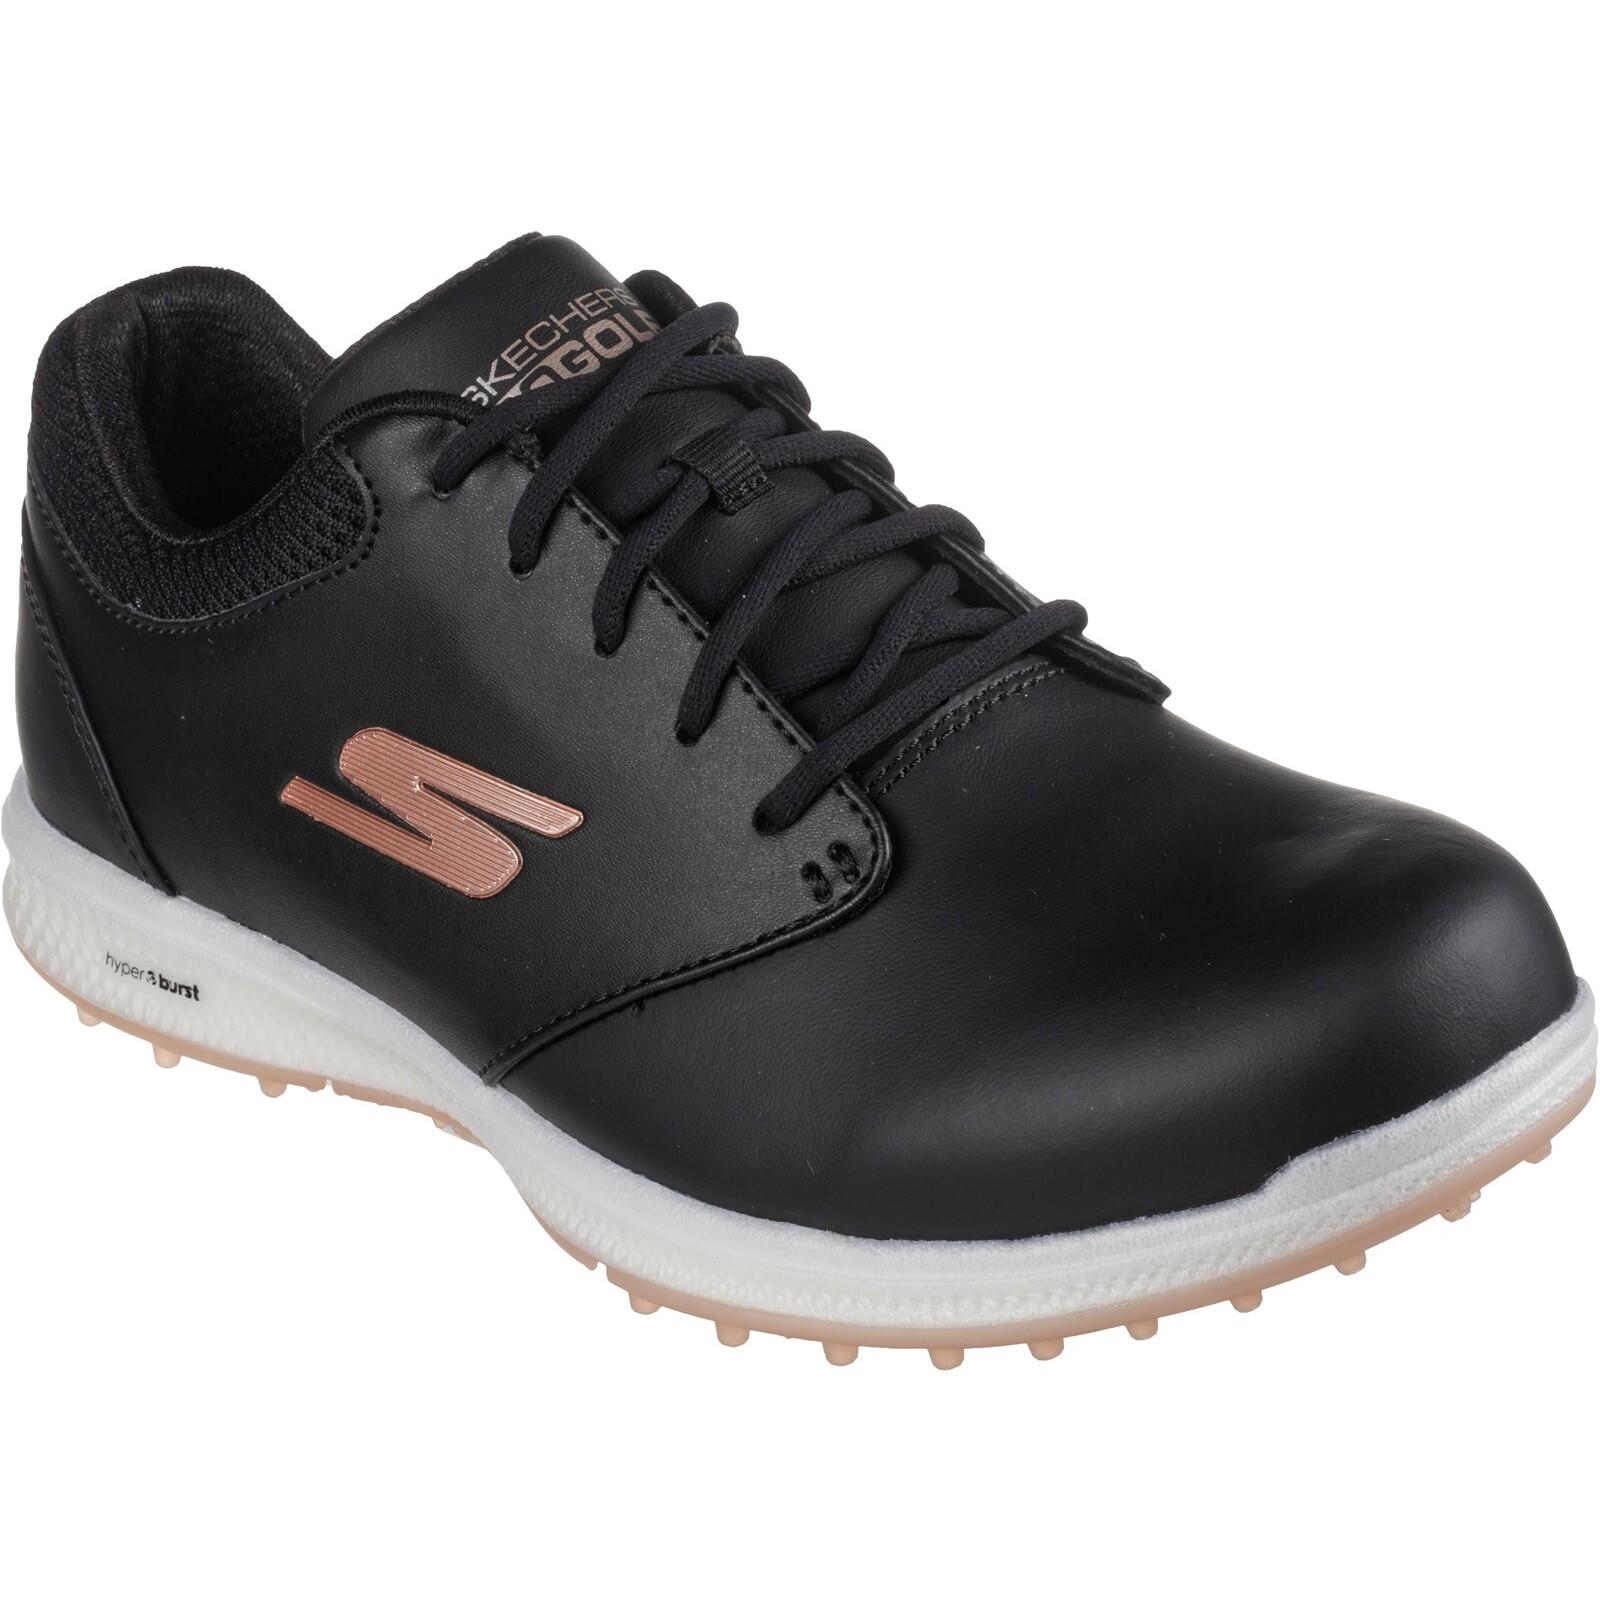 Go Golf Elite 4 Hyper Golf Shoes BLACK 2/3